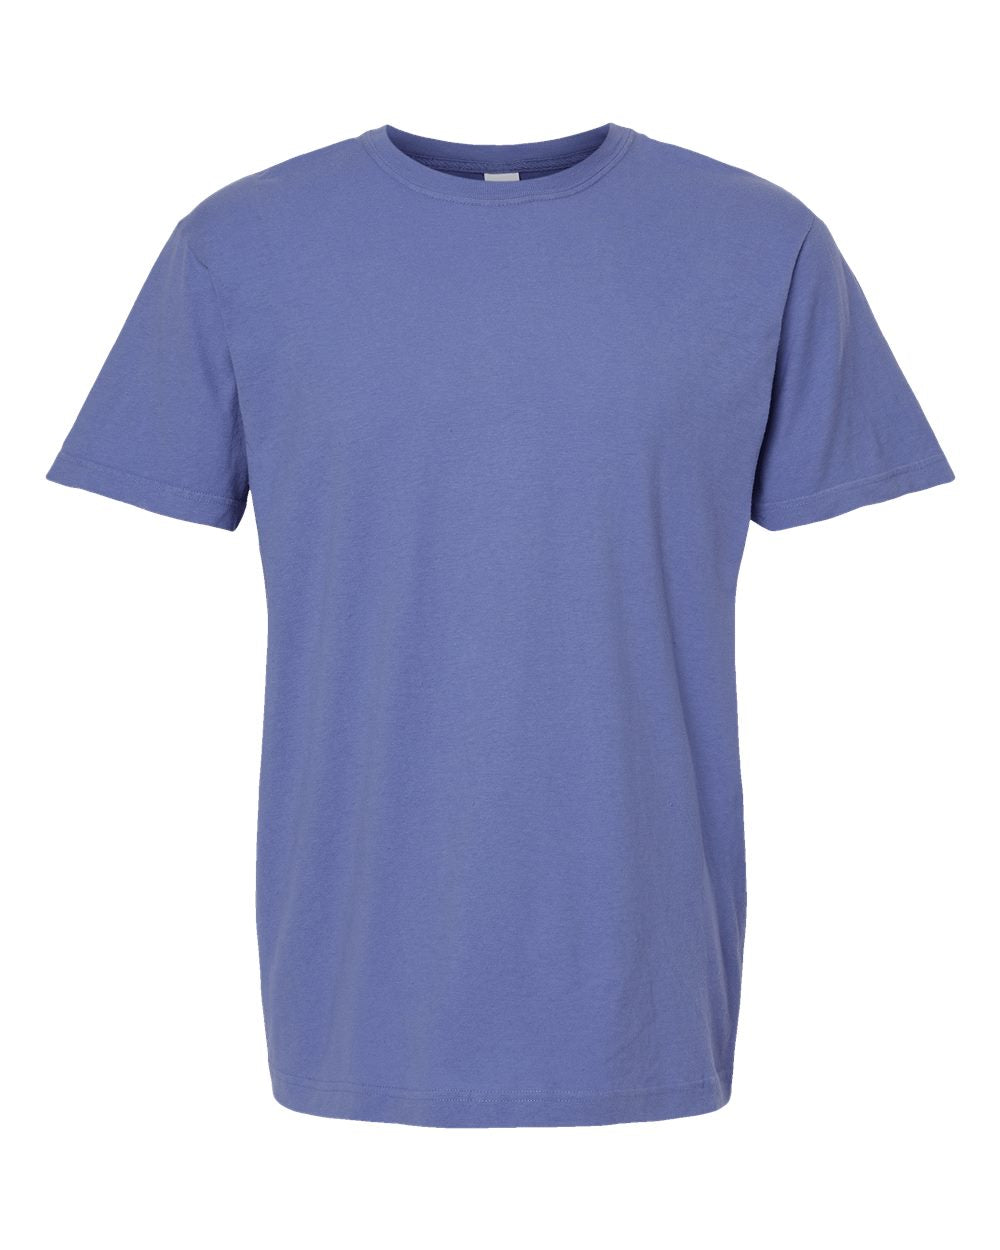 Unisex Vintage Garment-Dyed T-Shirt - M&O 6500M